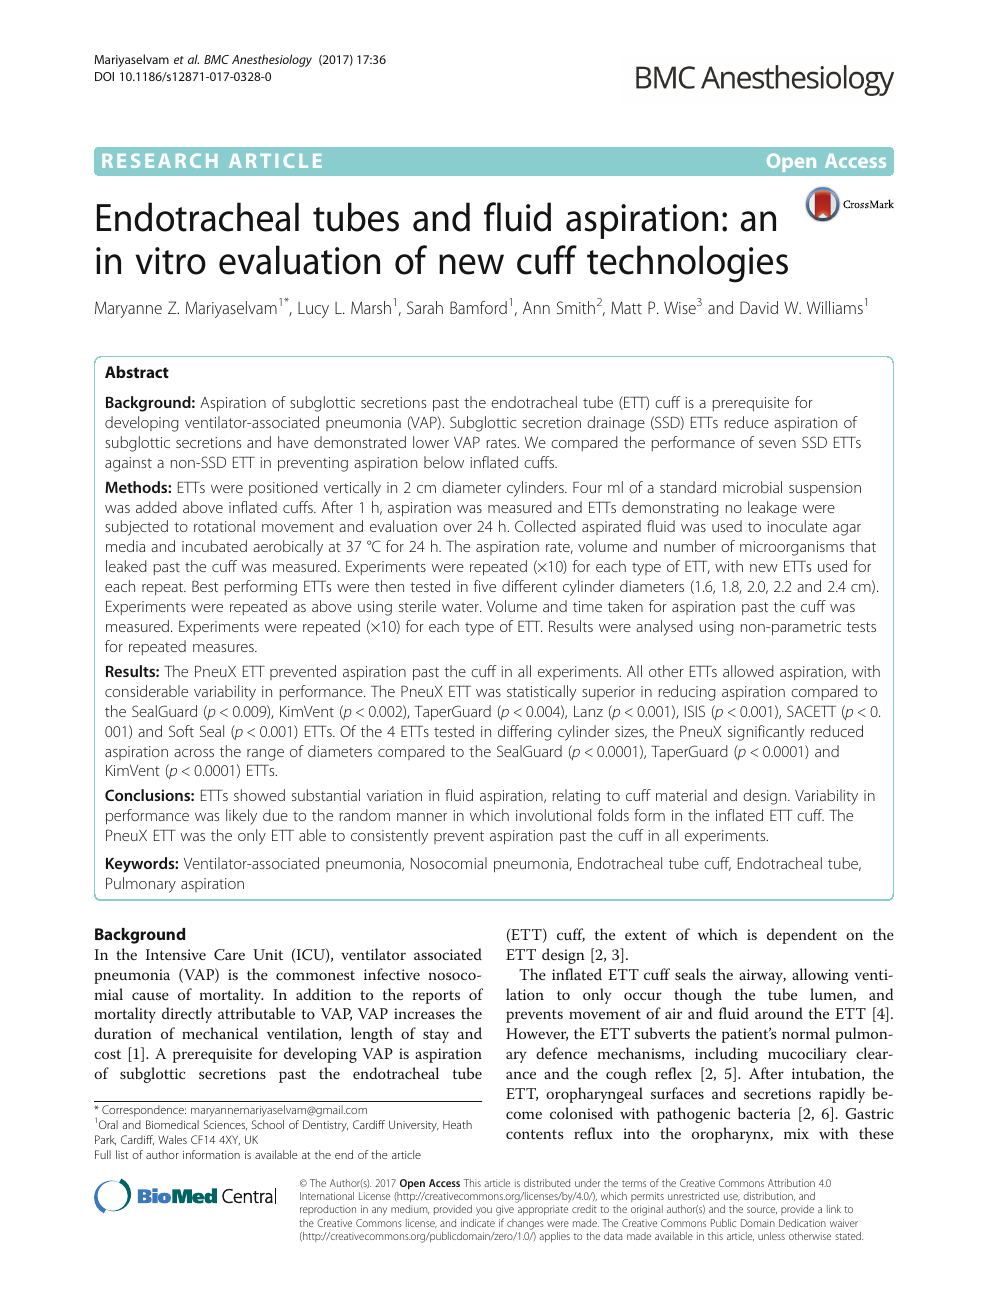 Endotracheal tube dedicated for subglottic secretions suctioning